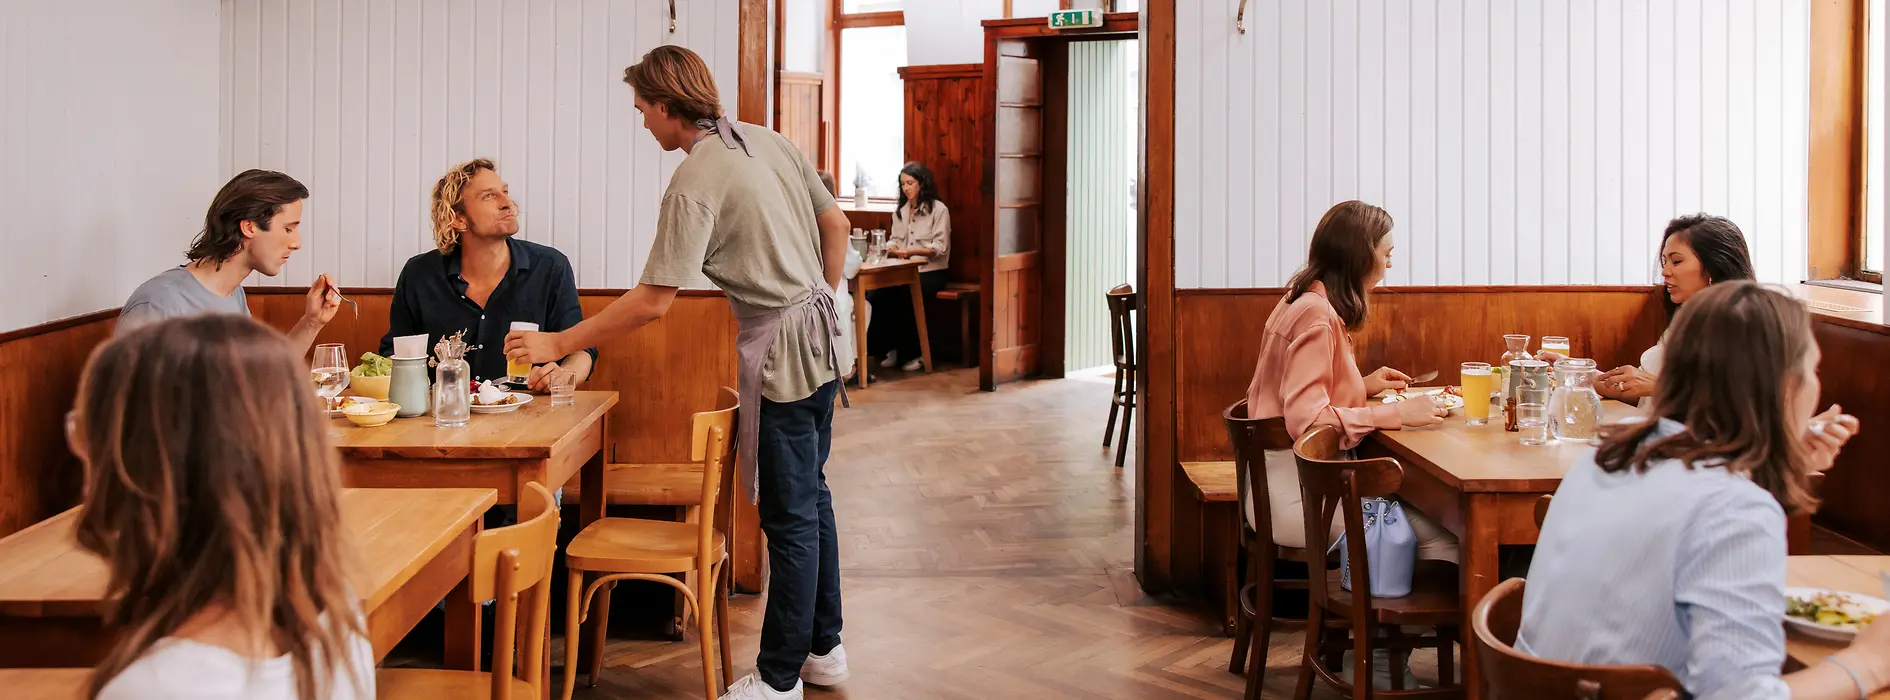 Stuwerviertel, restaurant Brösl, vue intérieure, clients